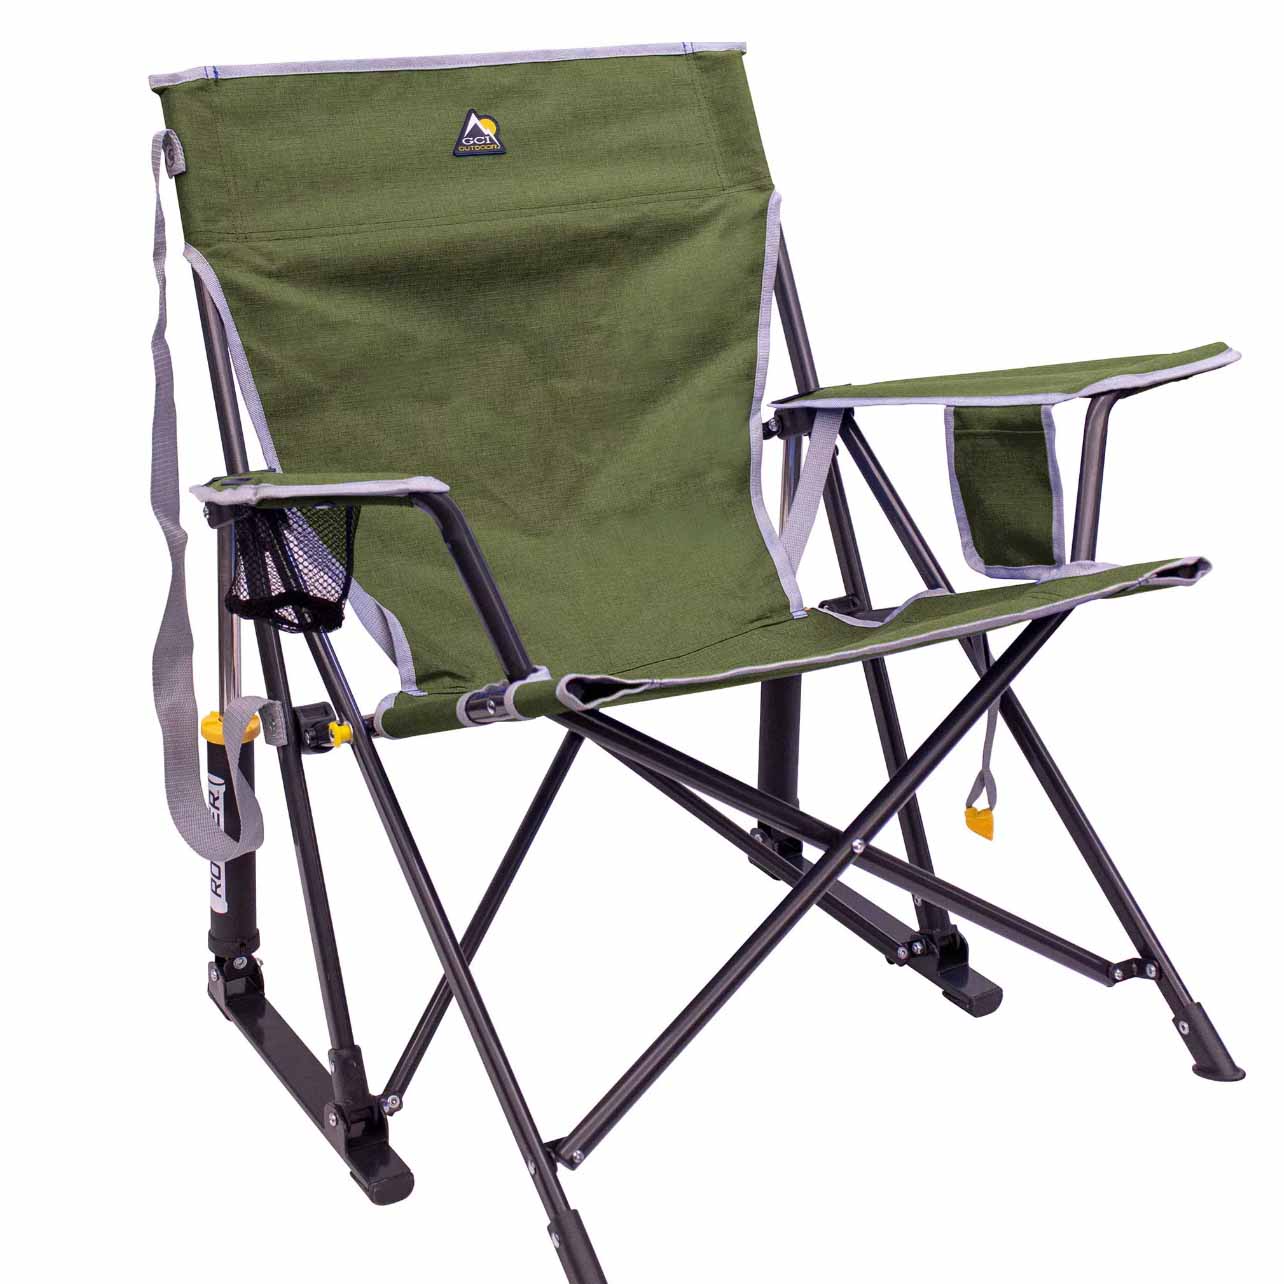 GCI Outdoor Kickback Rocker Chair in dark green